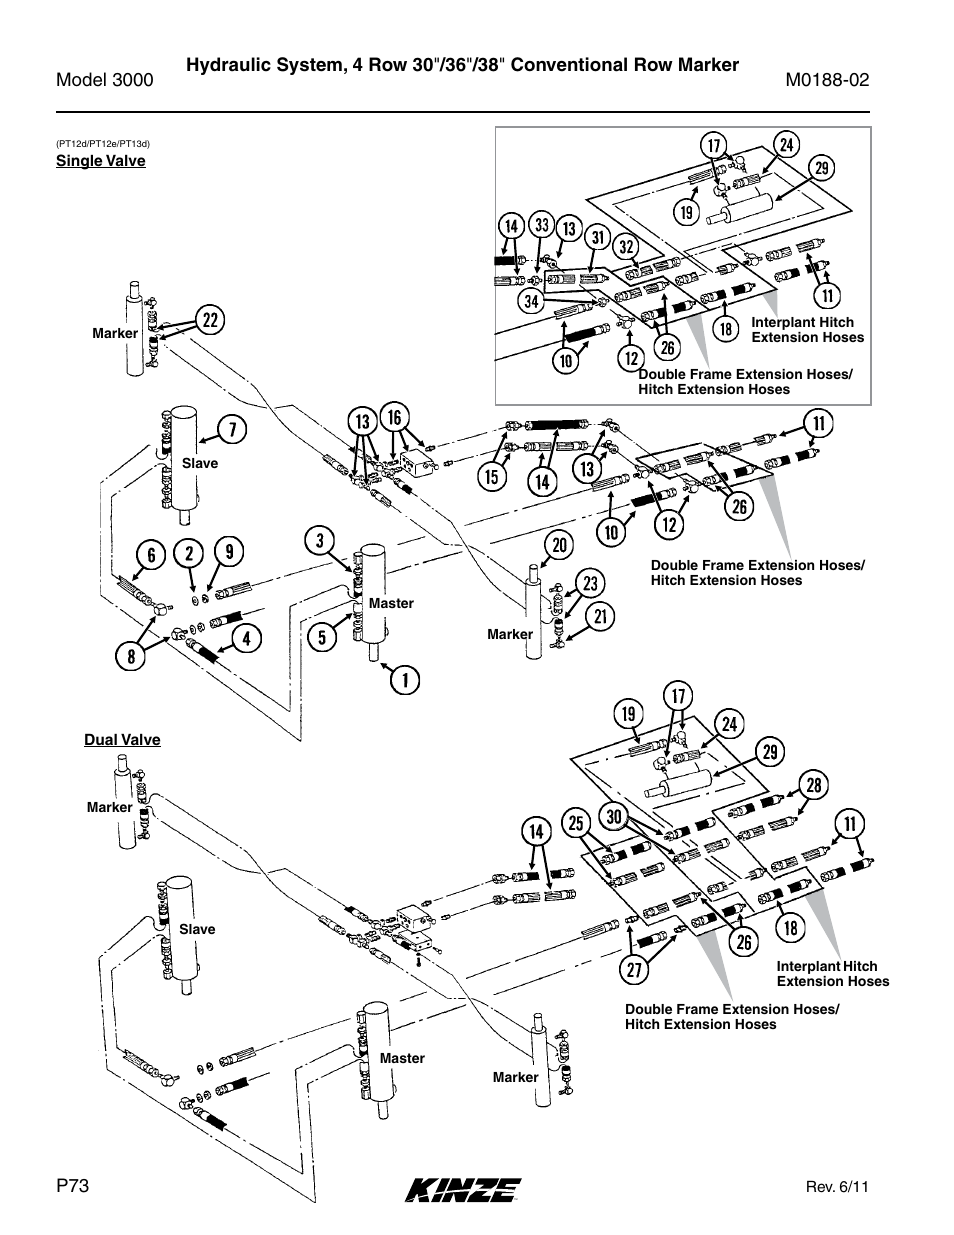 Kinze 3000 Rigid Frame Planter Rev. 5/14 User Manual | Page 76 / 154